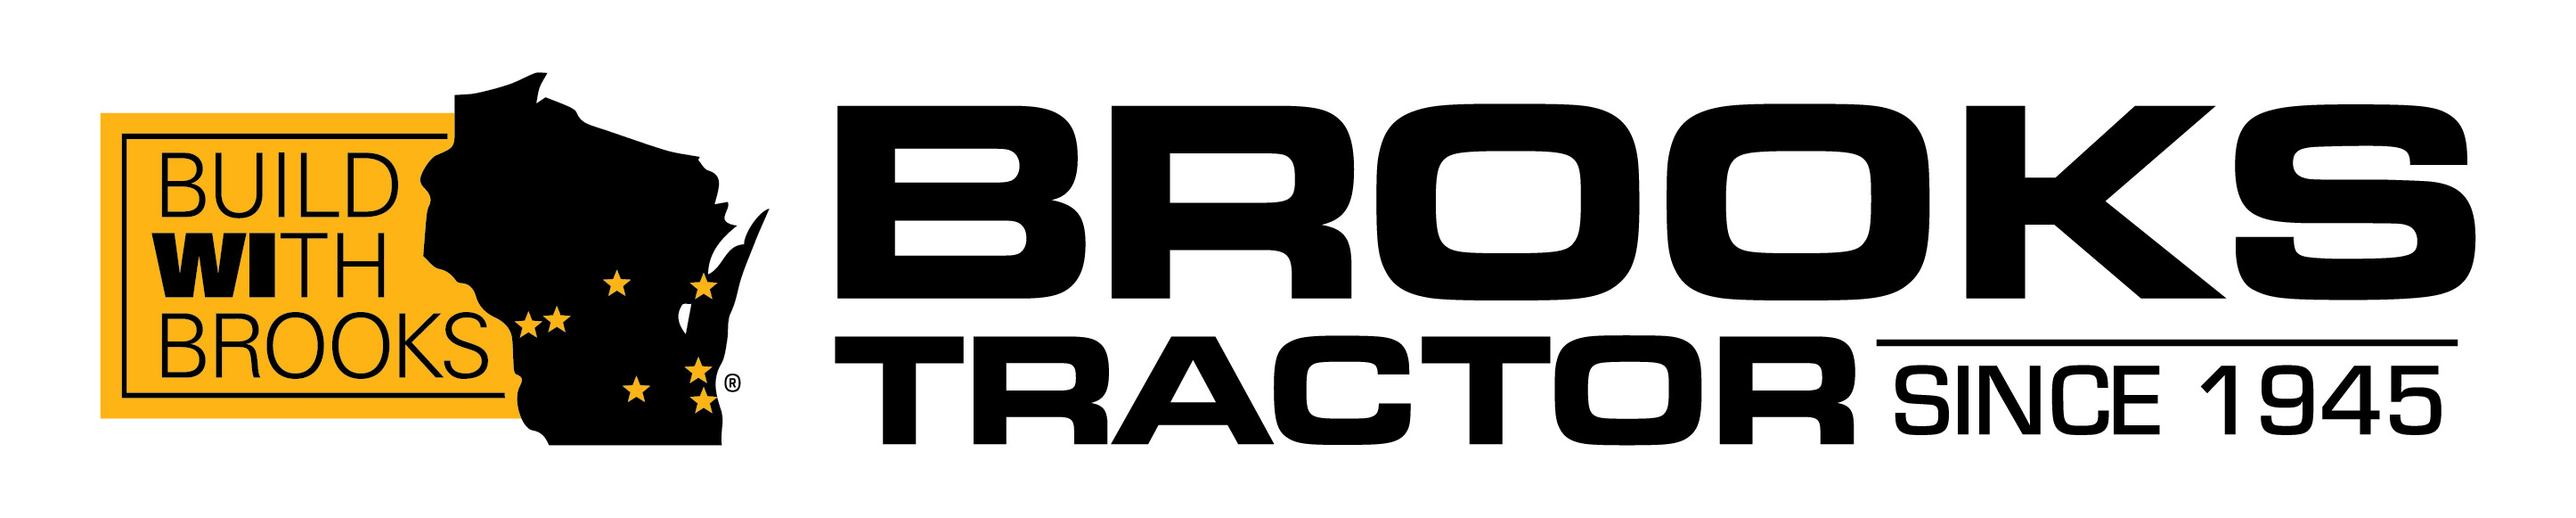 Brooks Tractor company logo